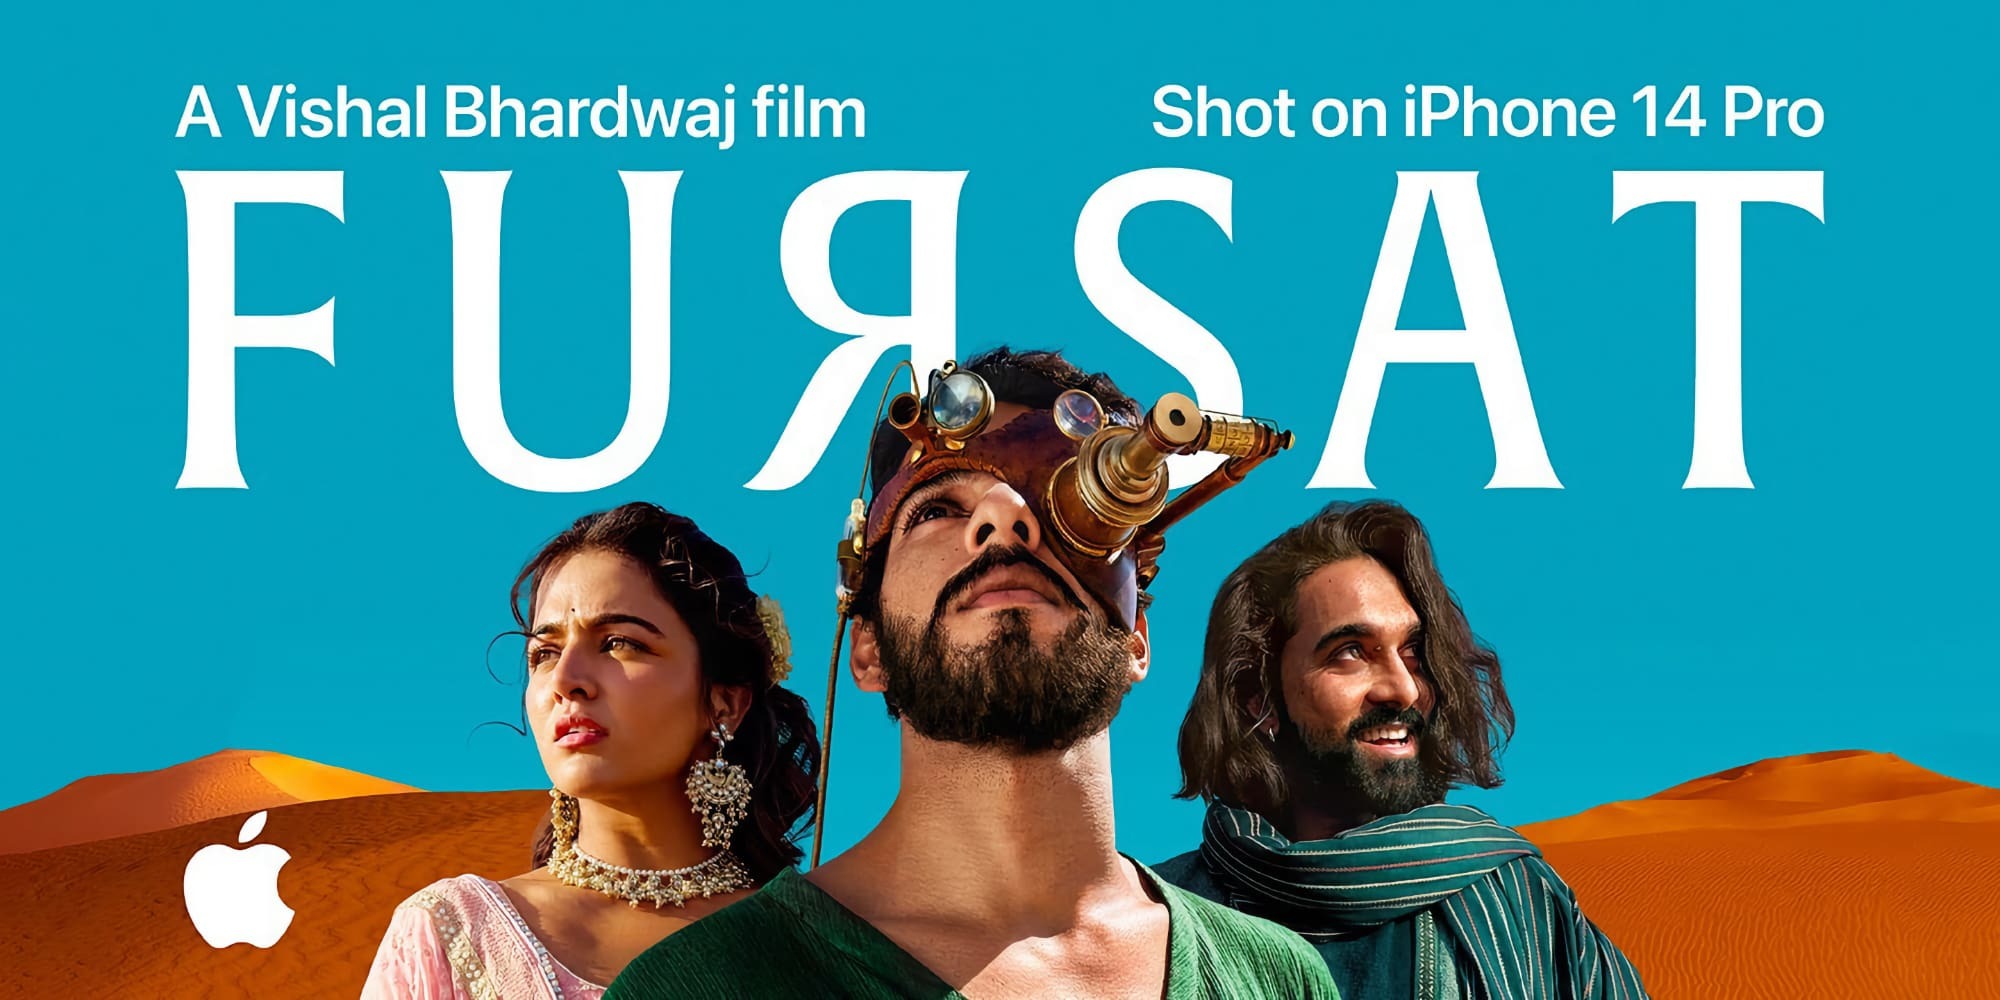 Apple shares new 'Shot on iPhone 14 Pro' short film: 'Fursat' - 9to5Mac